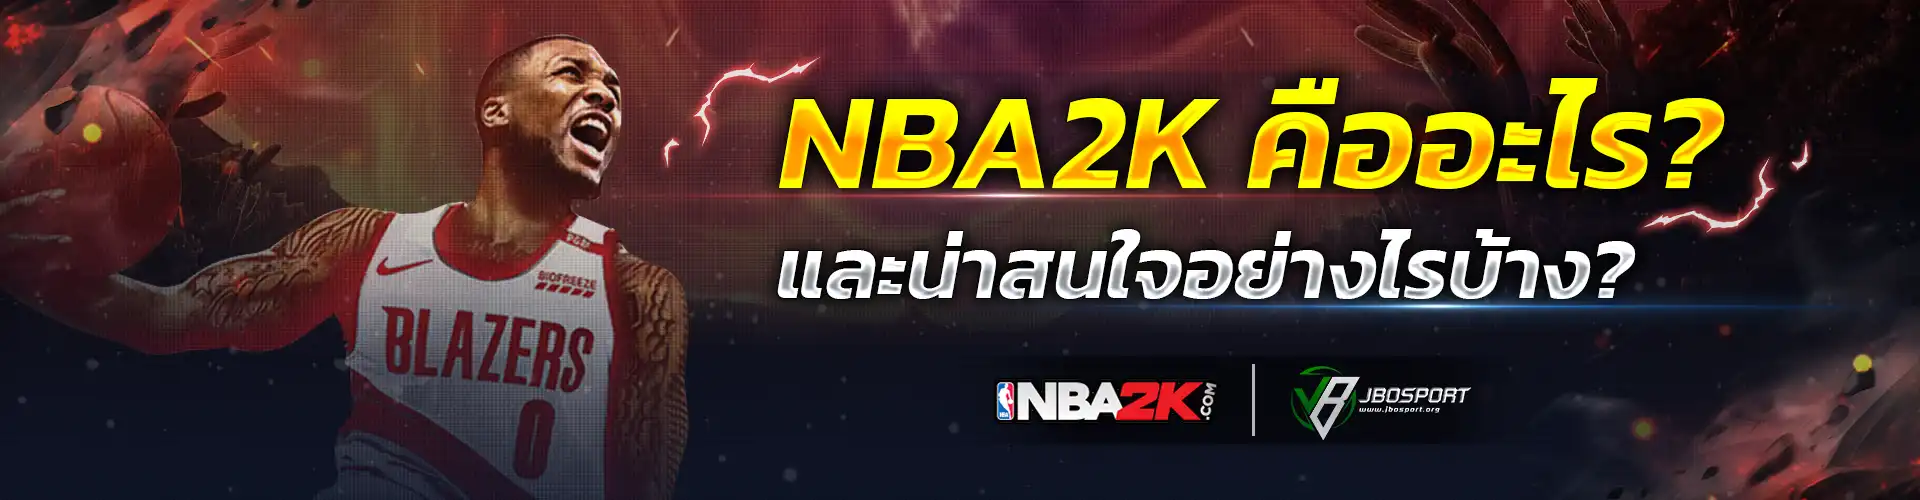 NBA2K JBOSPORT